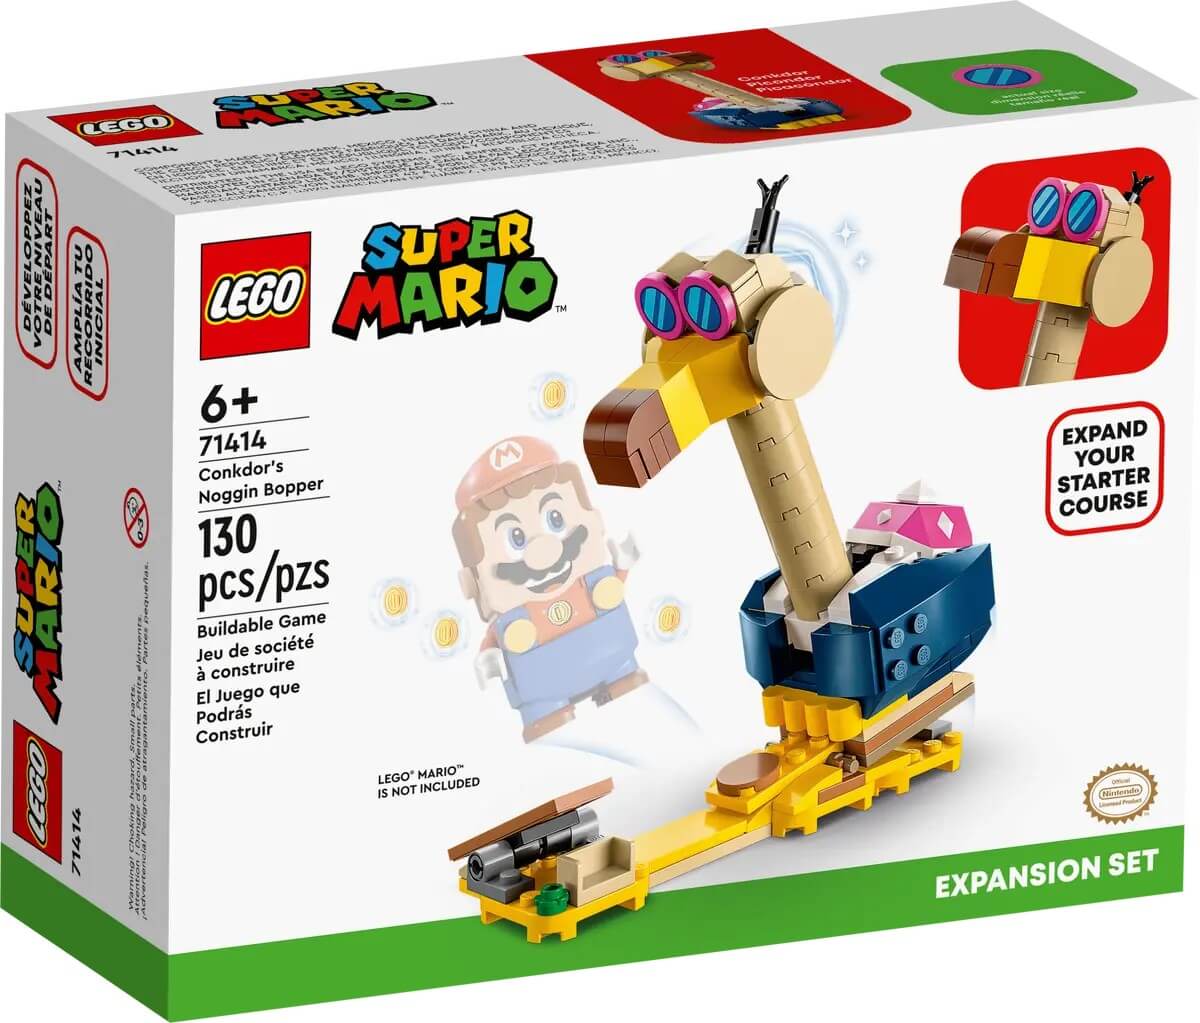 Фигурка-конструктор Lego Super Mario Conkdor's Noggin Bopper Expansion Set 71414, 130 деталей конструктор lego super mario peachs castle expansion set 71408